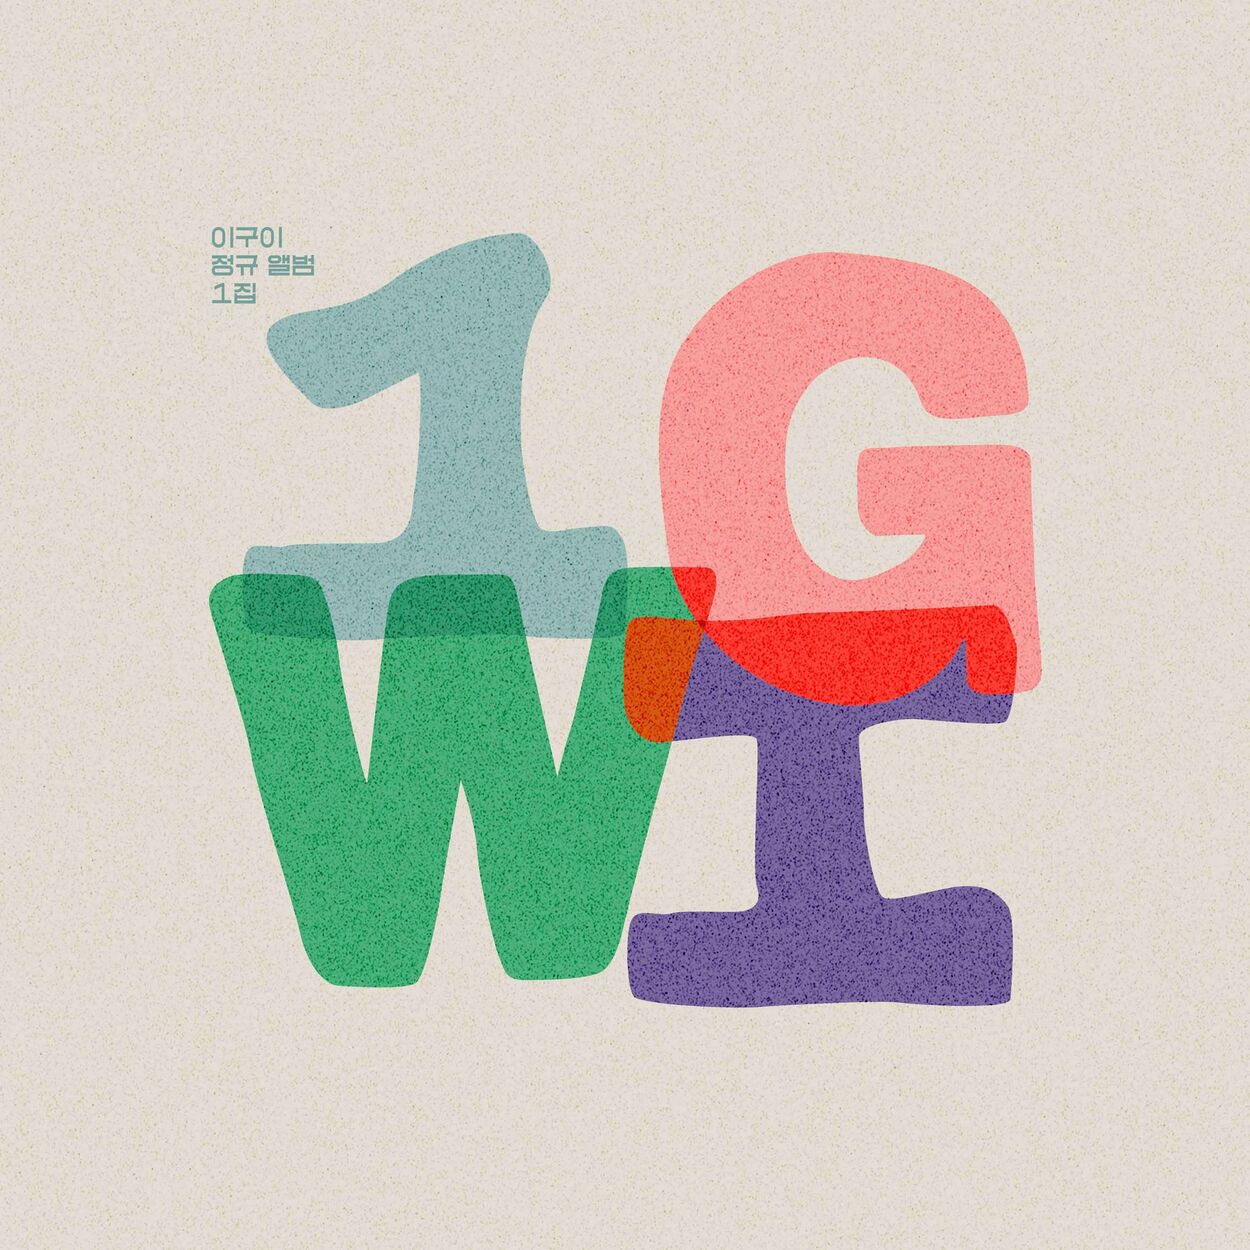 IGWI – IGWI’s 1st Full Album